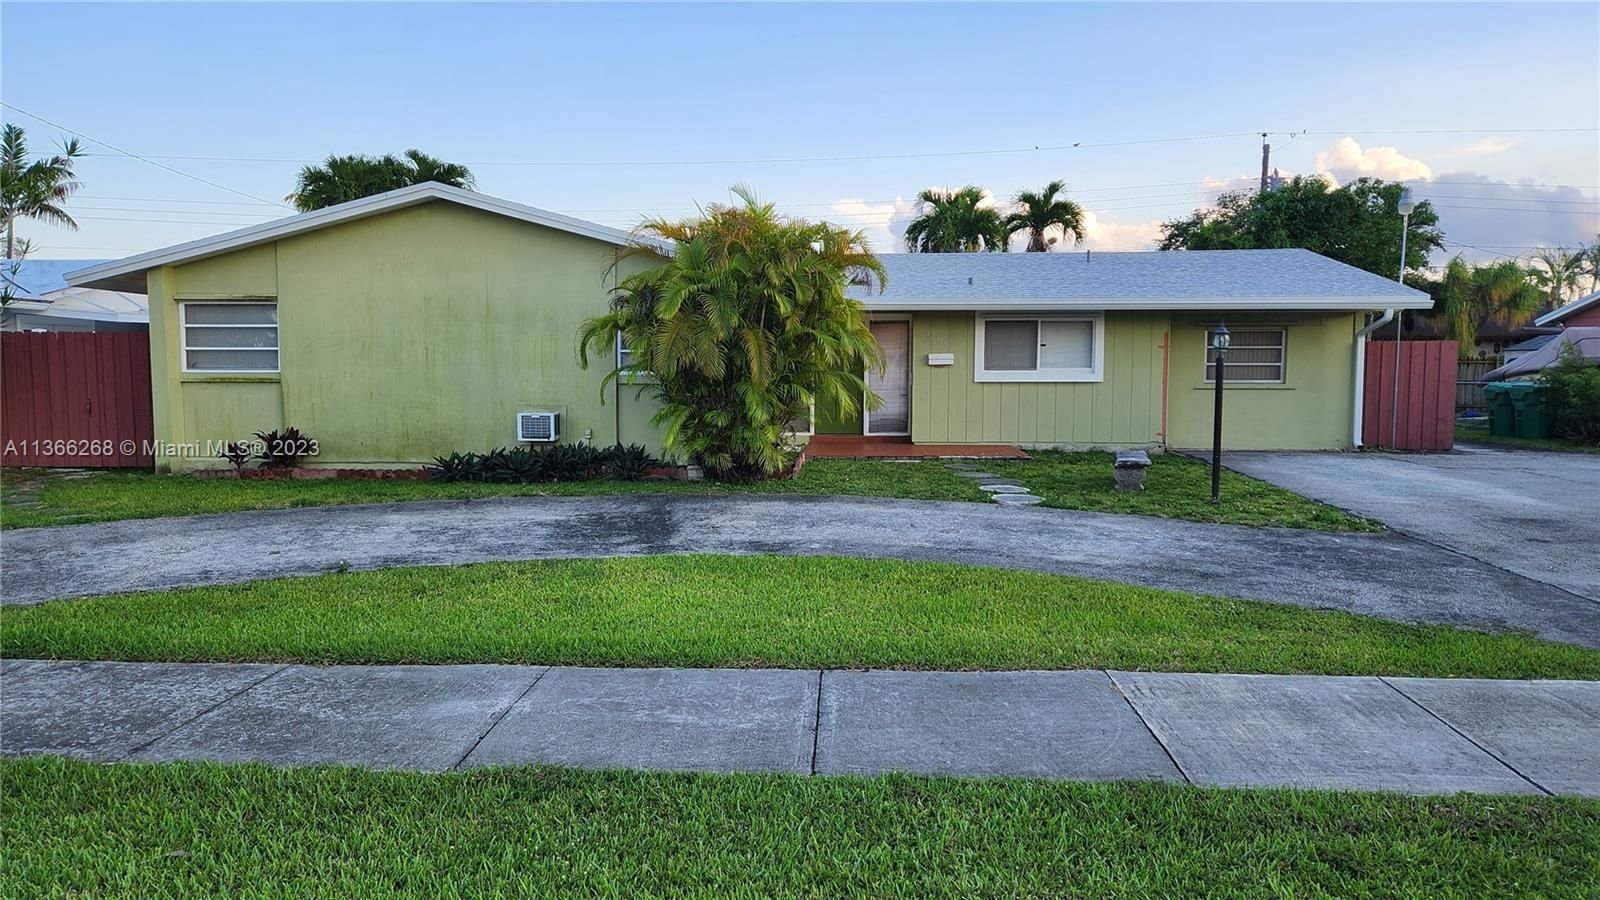 Real estate property located at 12310 40th St, Miami-Dade County, Miami, FL